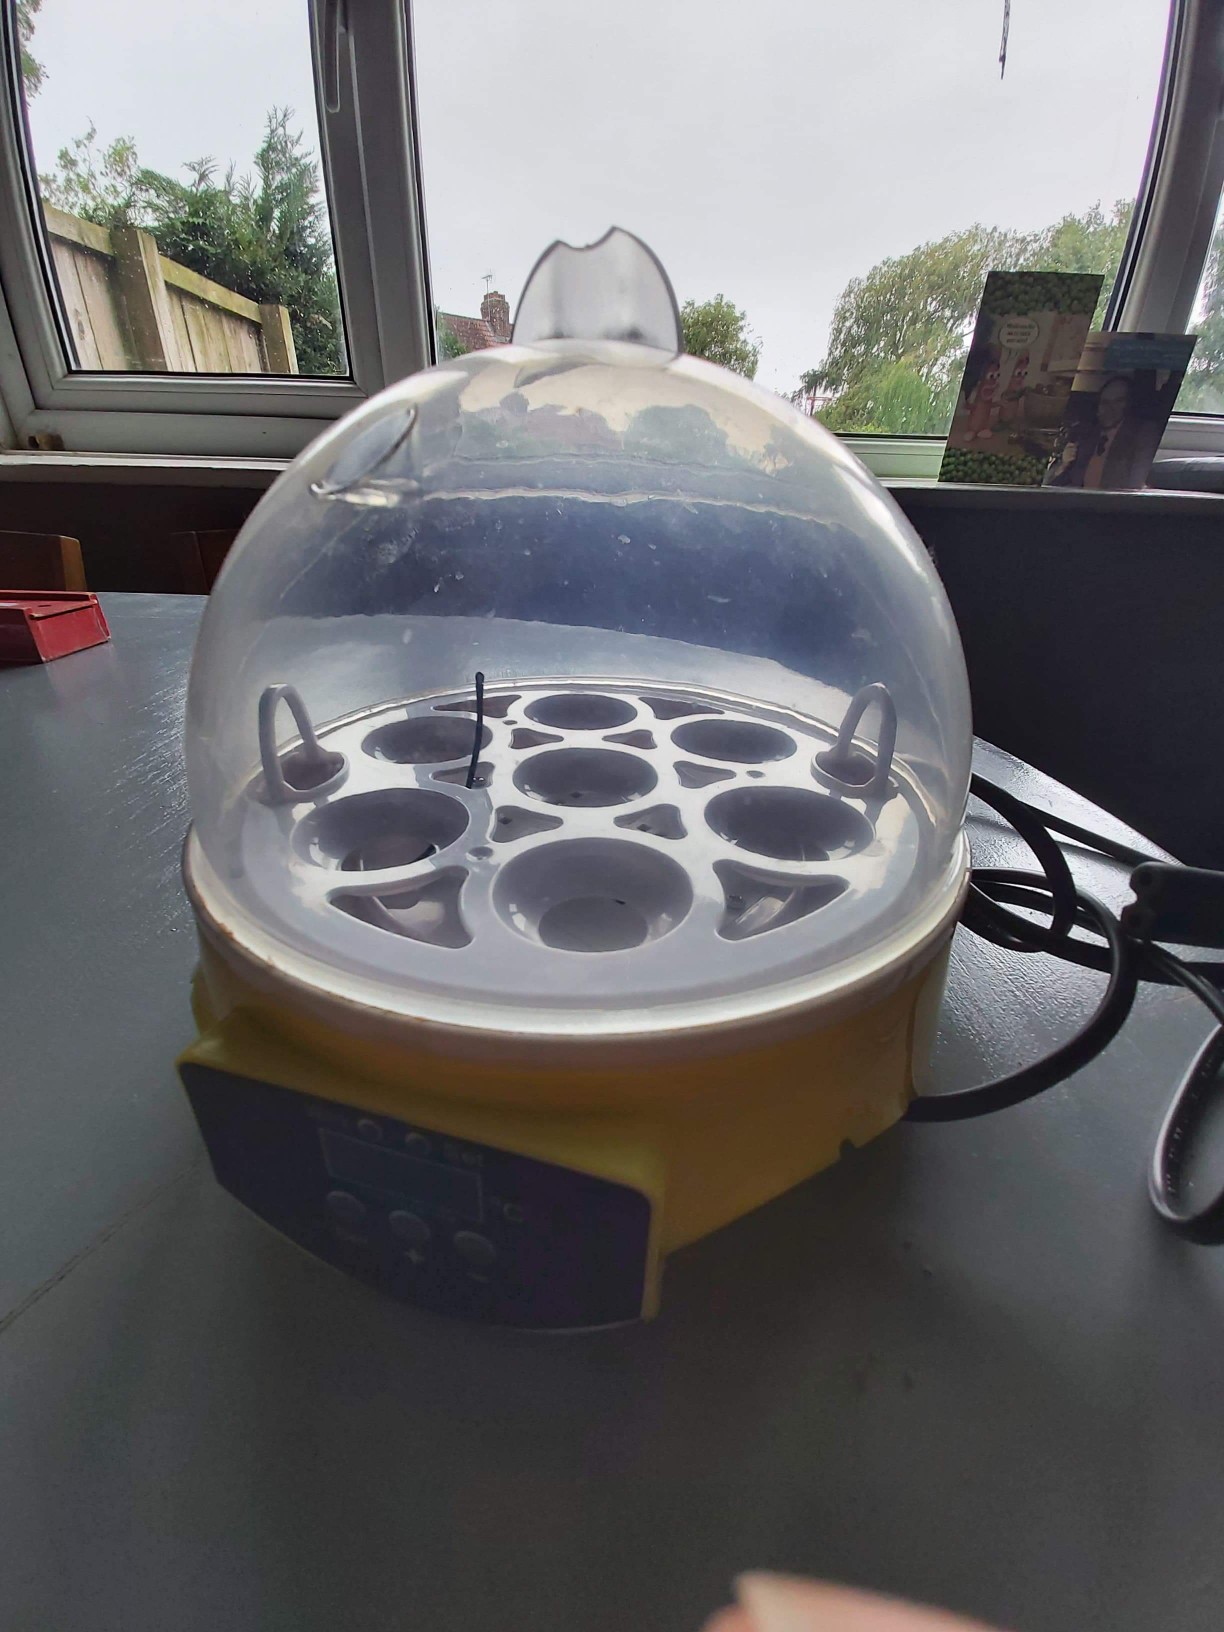 egg incubator for sale in okc